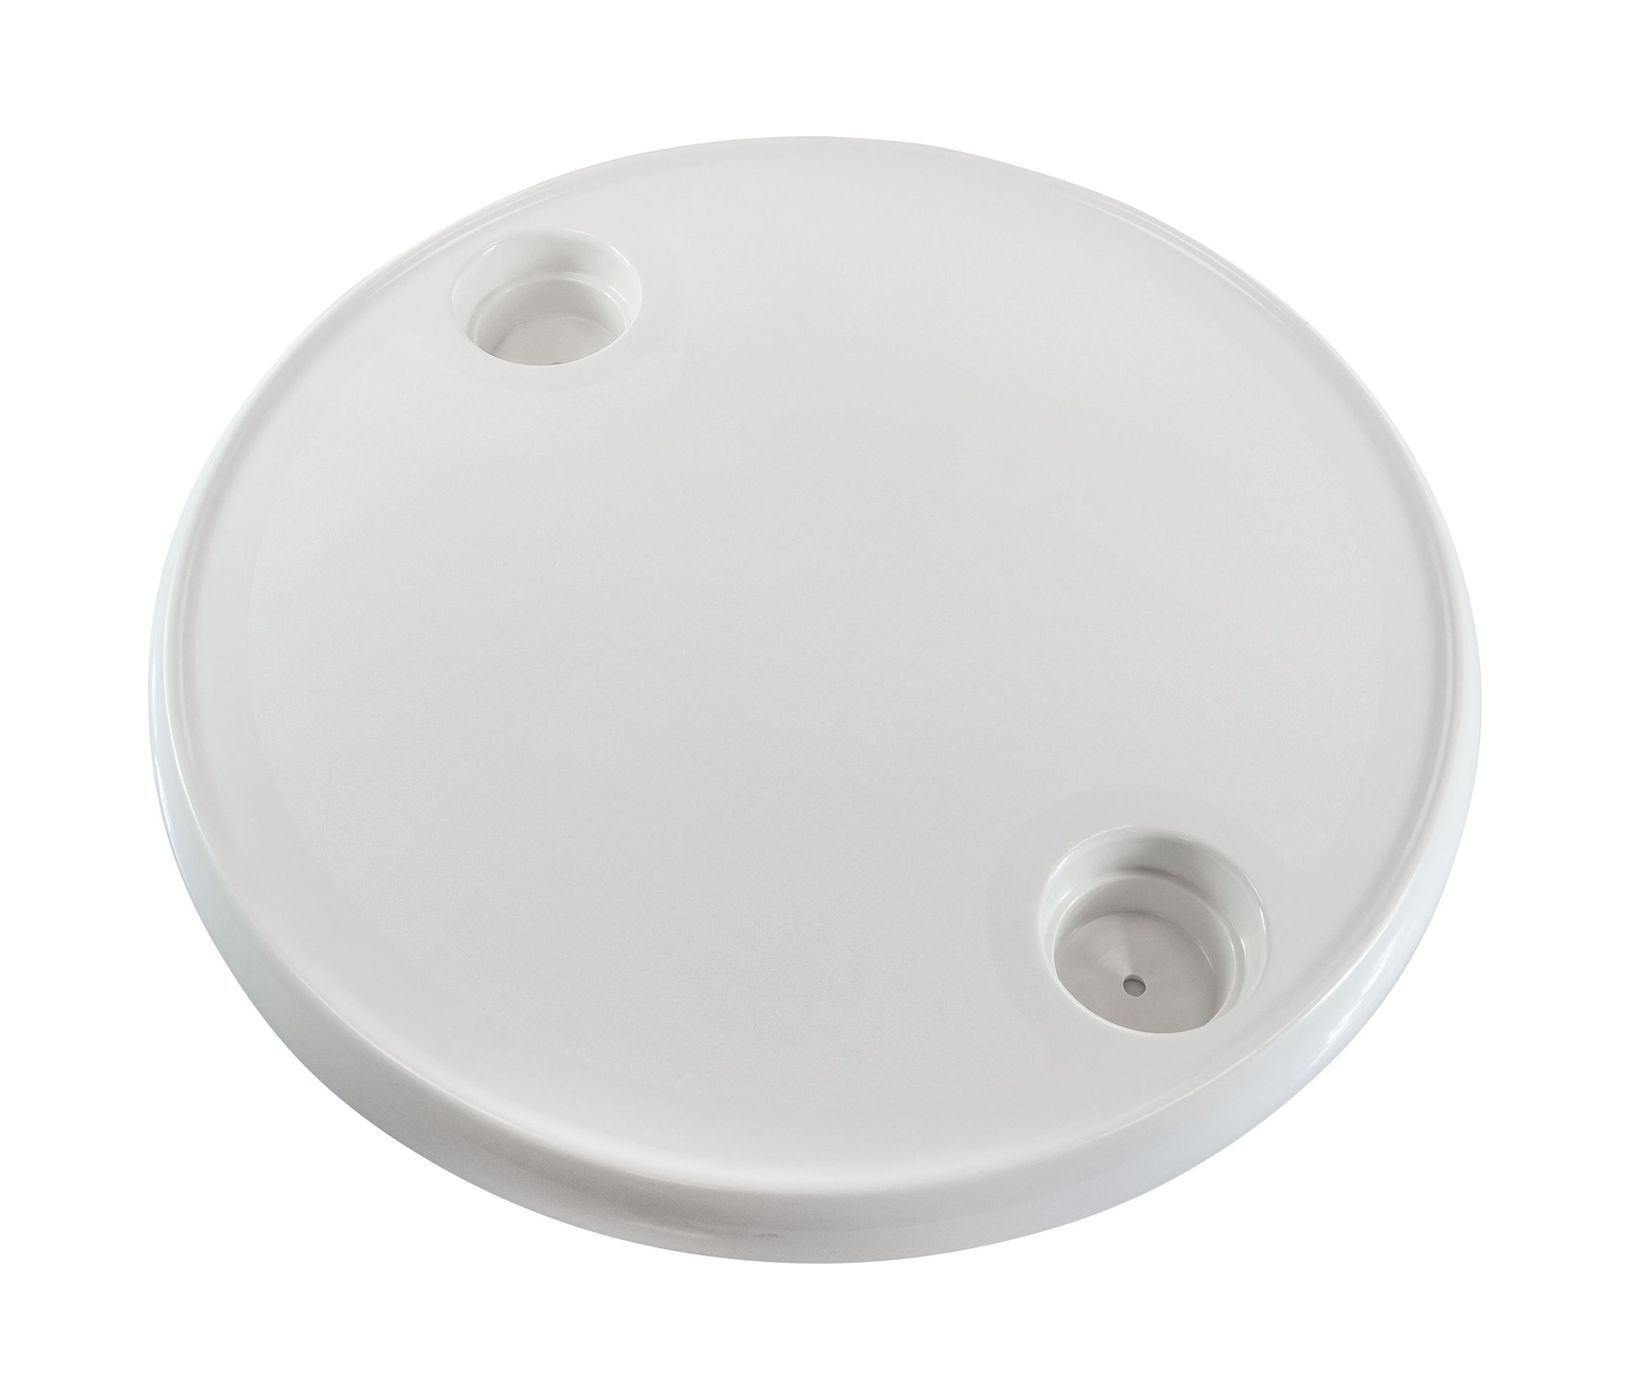 Столешница круглая пластиковая 610 мм 1670002, цвет белый